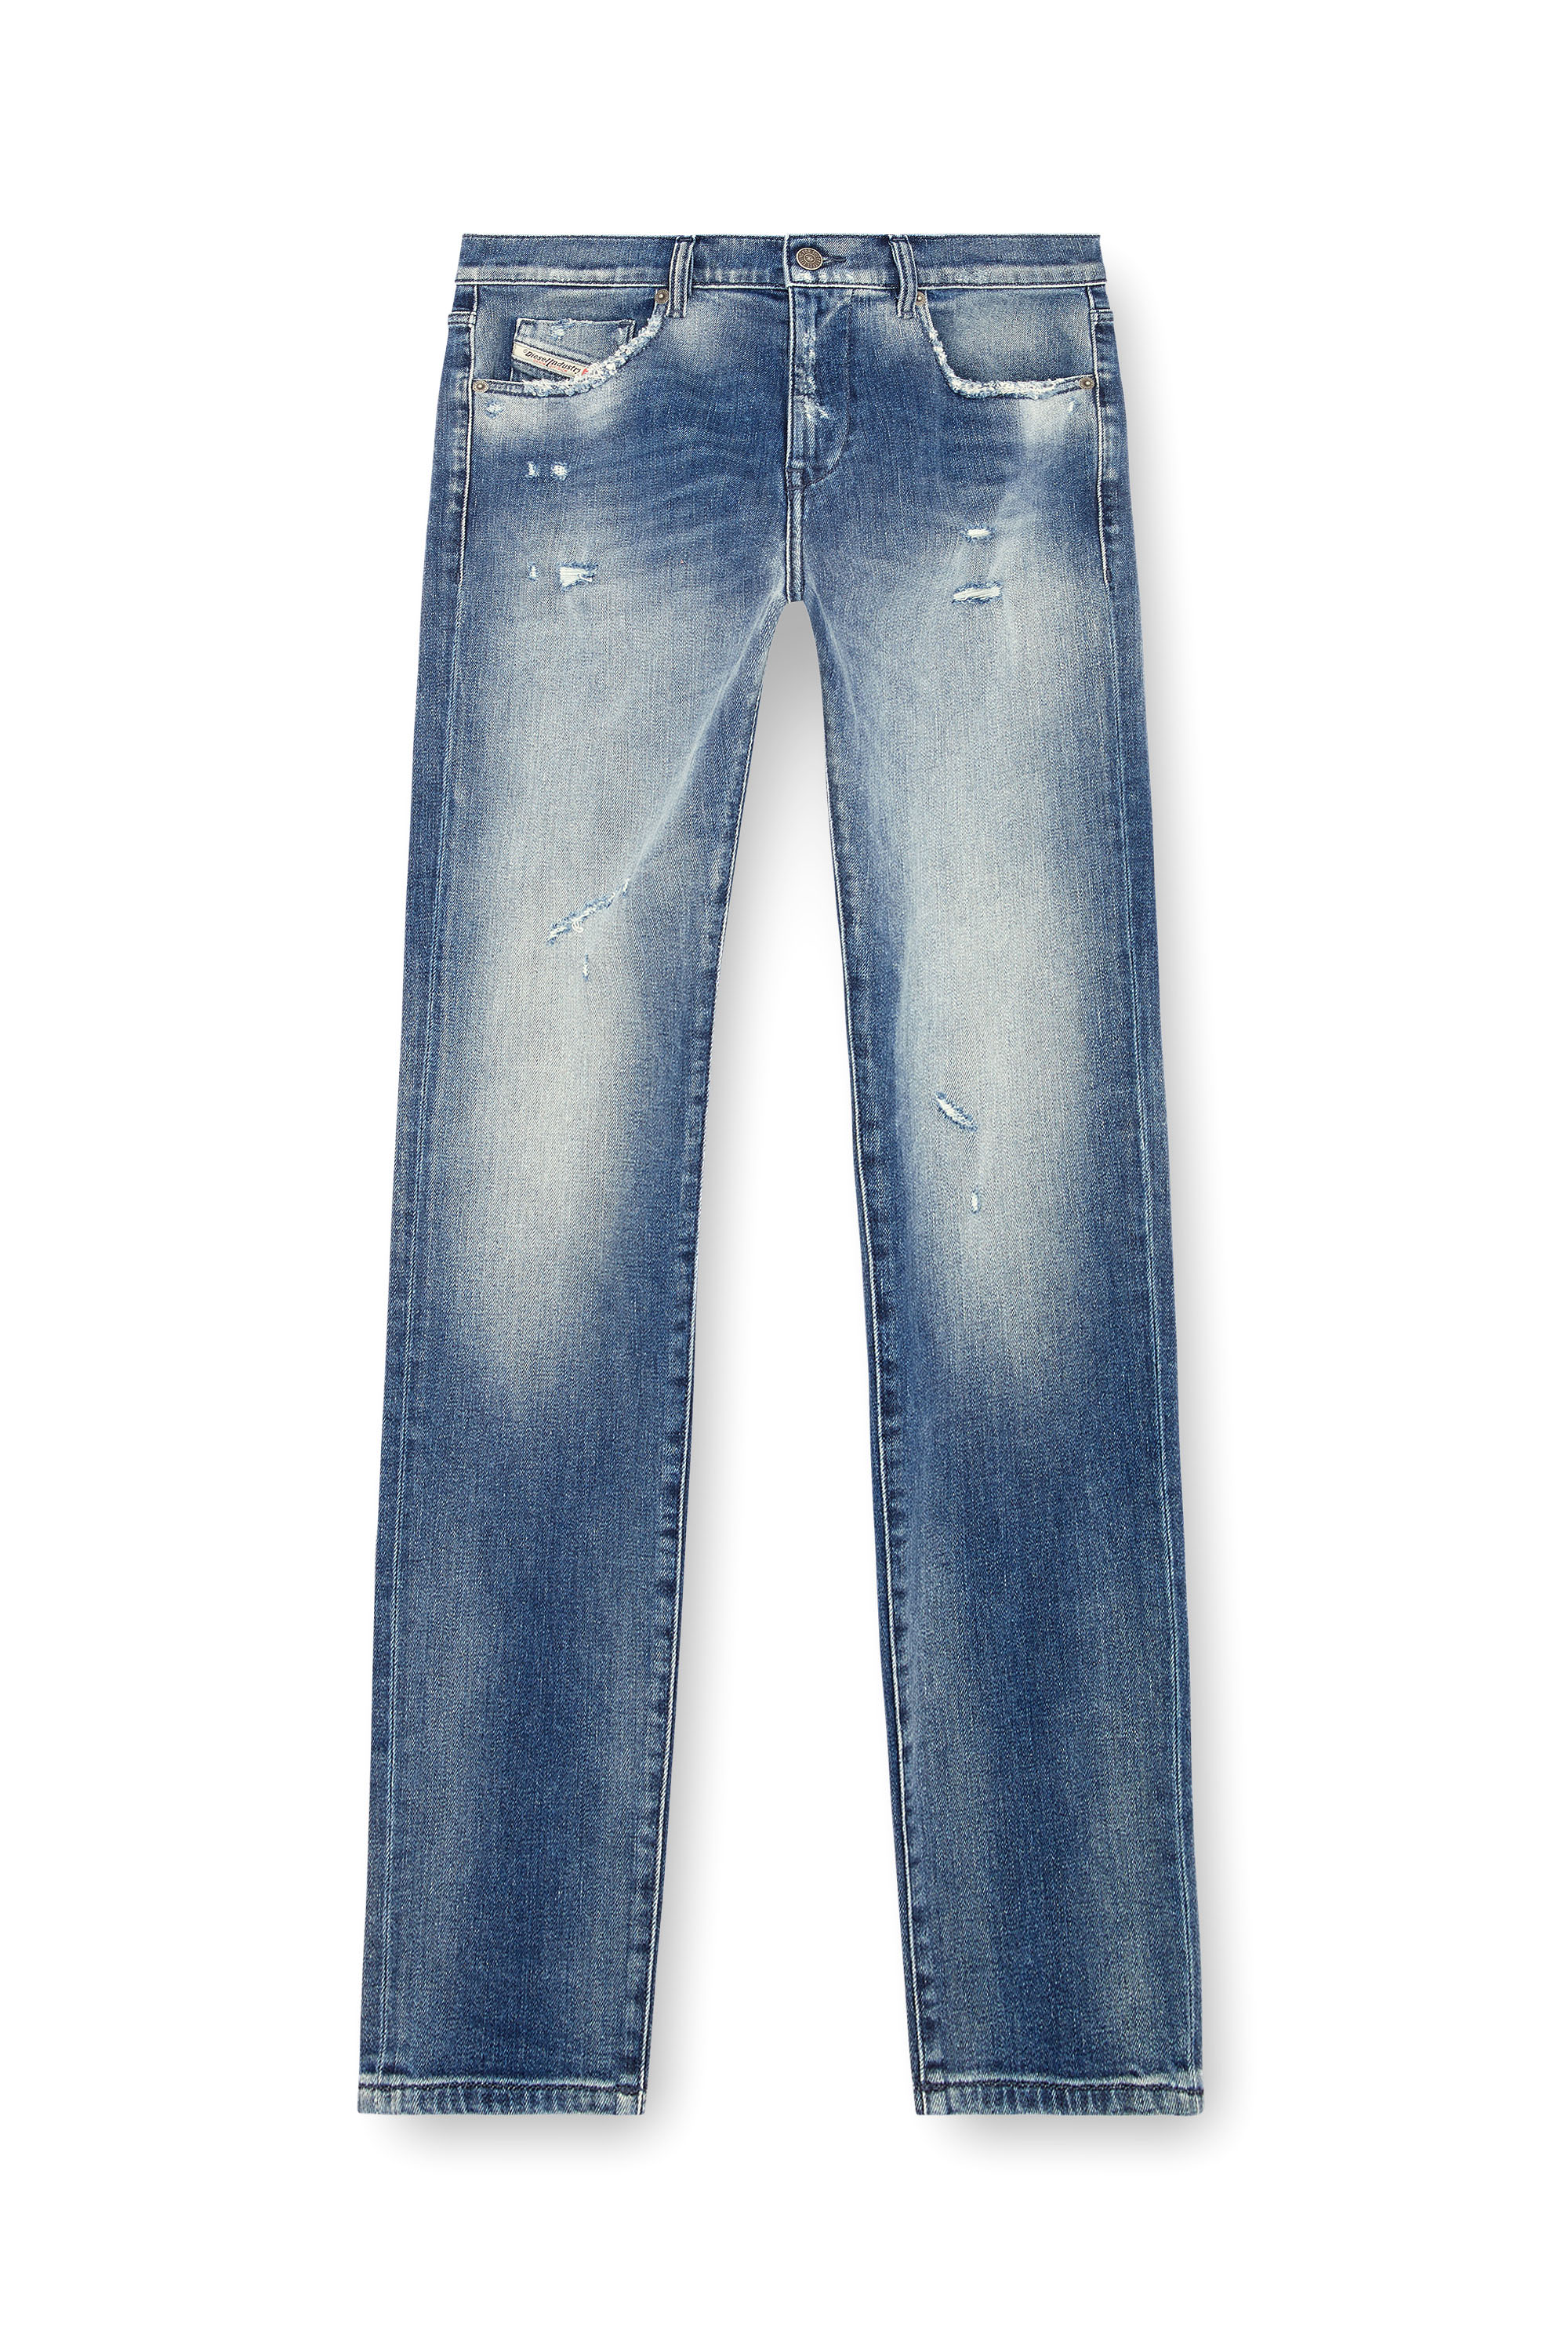 Diesel - Slim Jeans 2019 D-Strukt 09J61, Hombre Slim Jeans - 2019 D-Strukt in Azul marino - Image 3